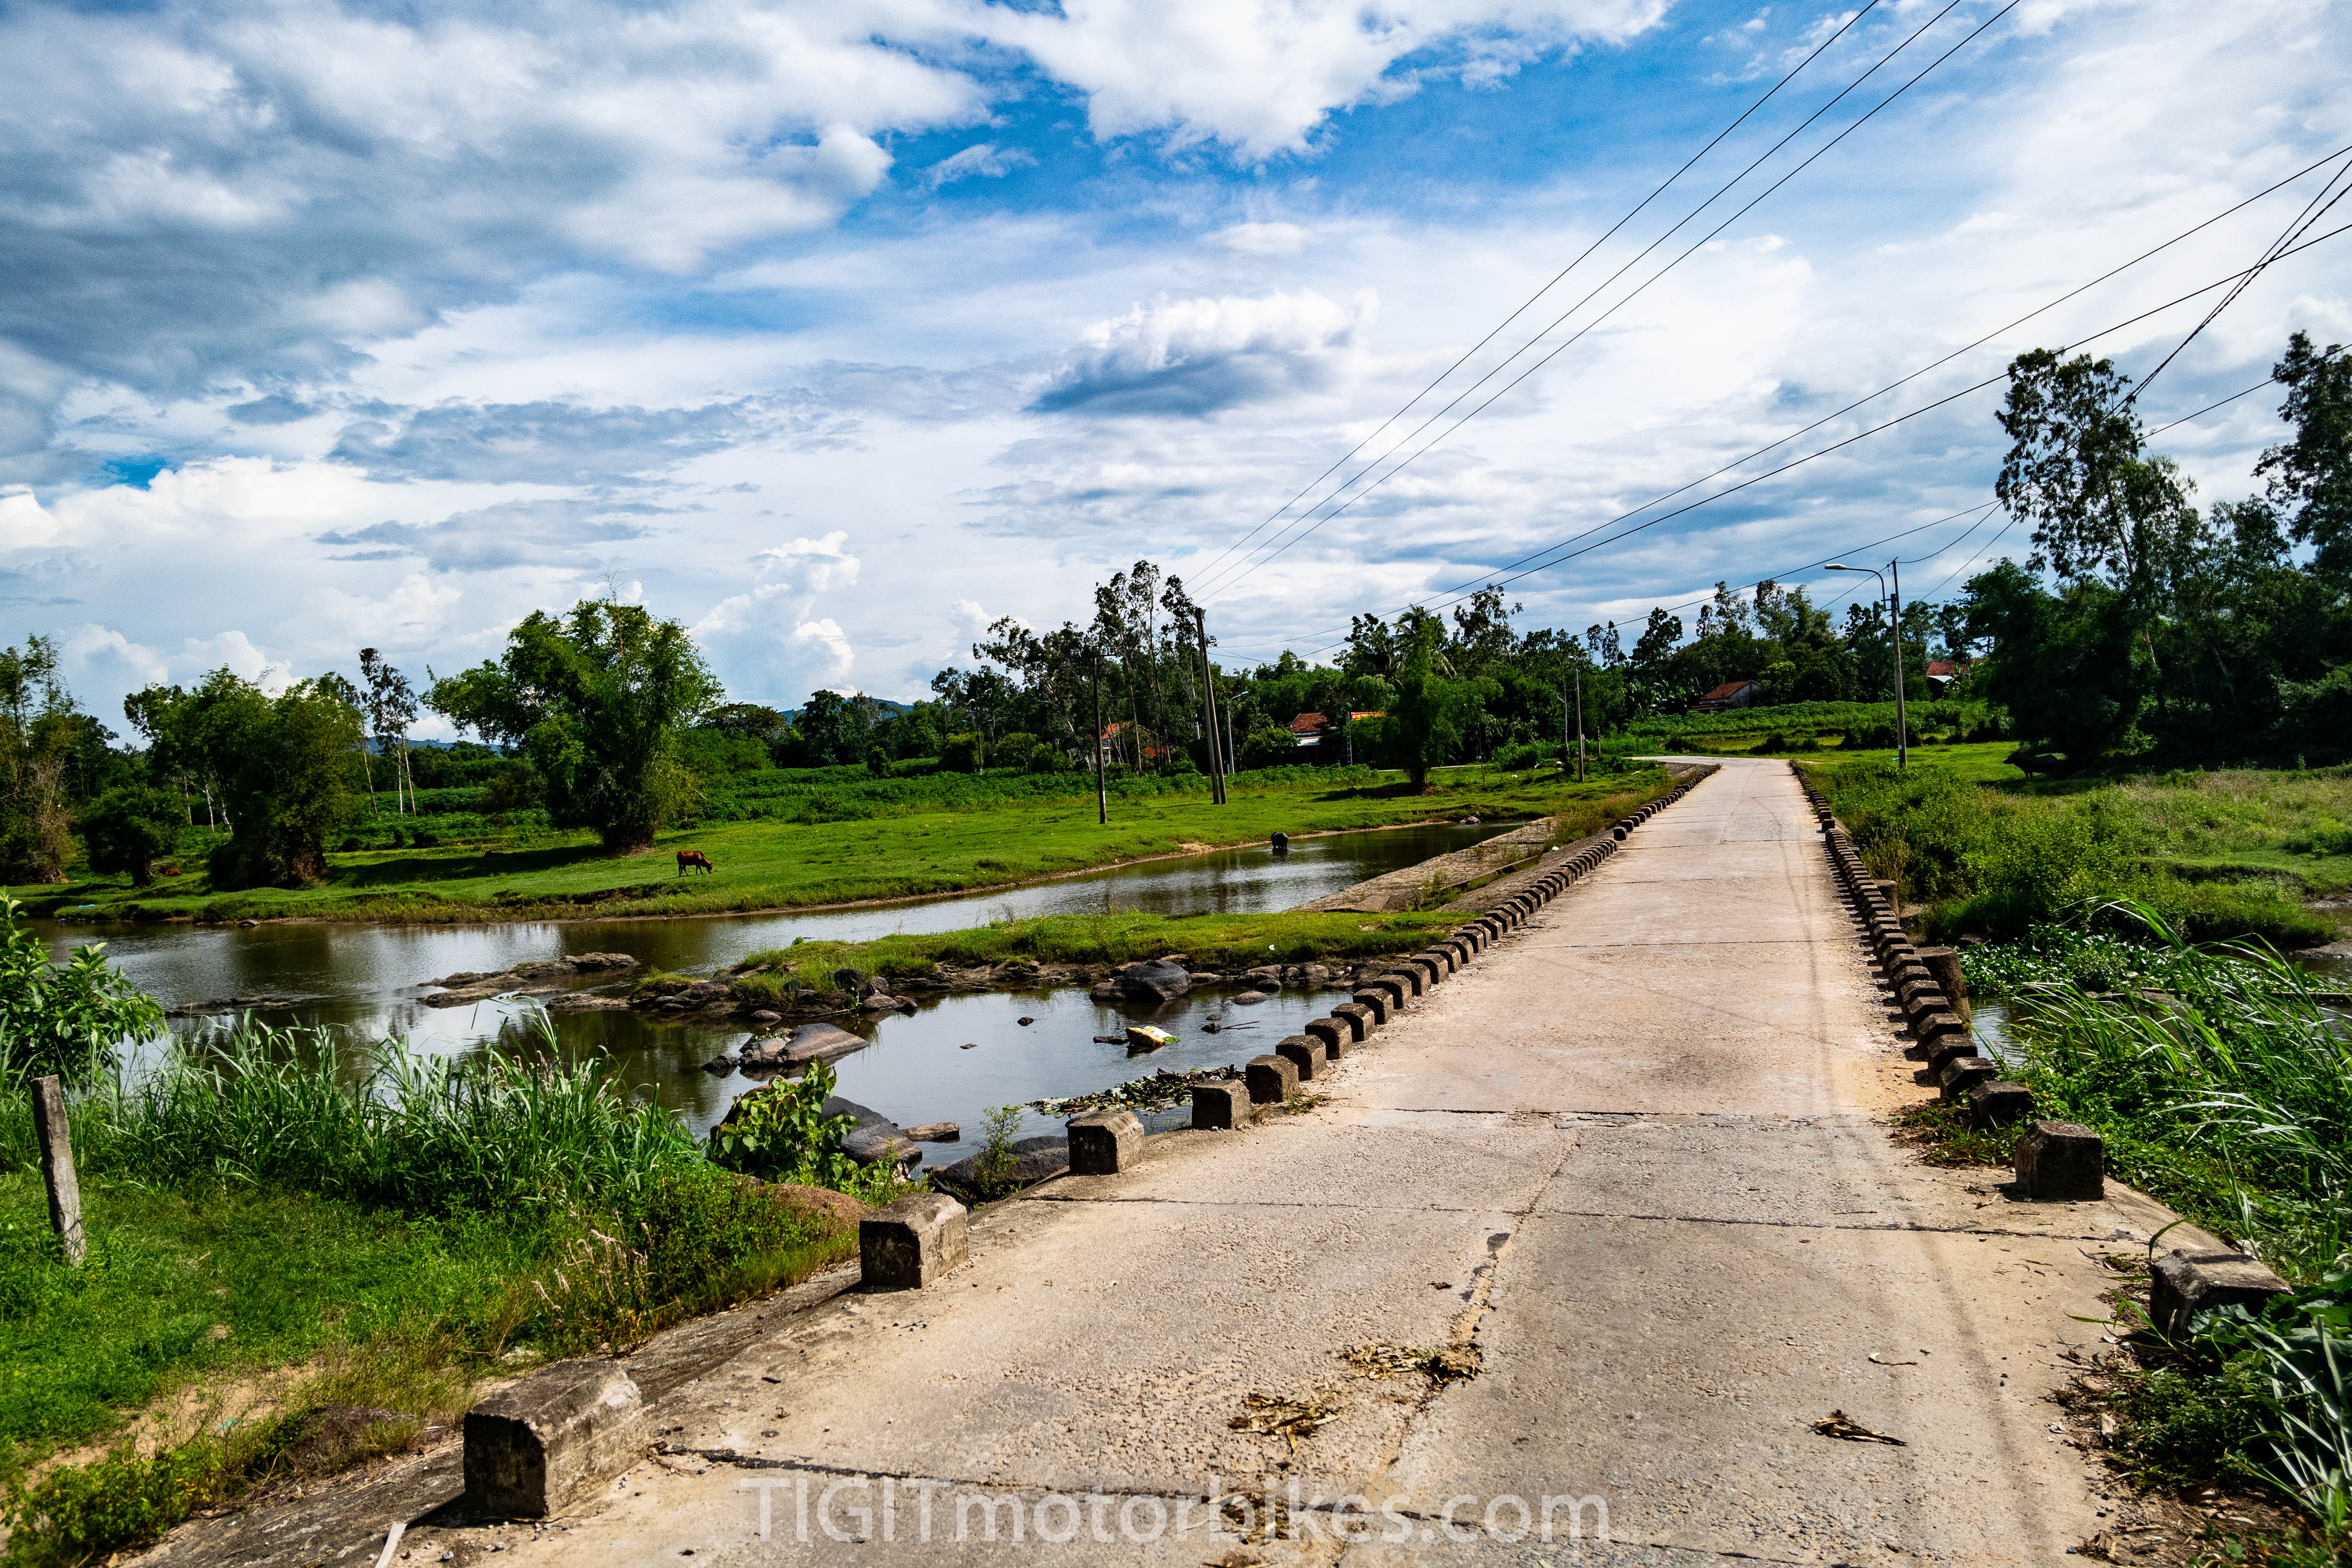 Danang to Nha Trang has some nice roads